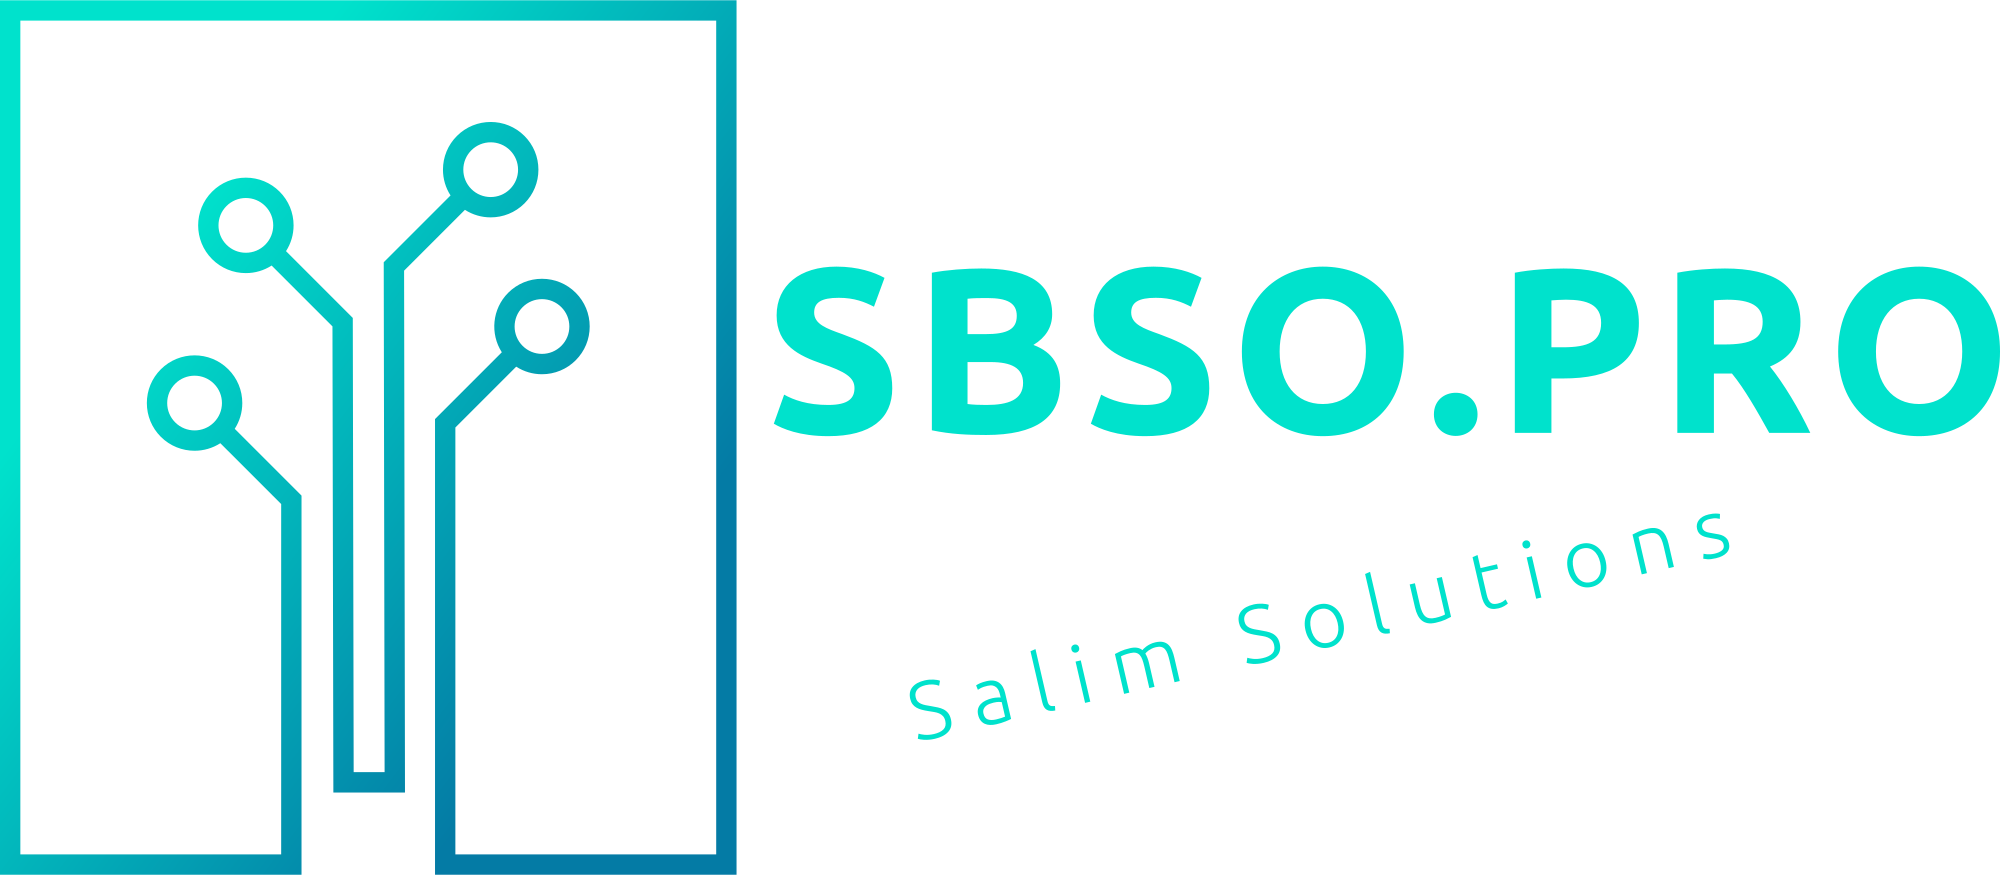 SBSO.PRO SALIM BLAL SOLUTIONS PRO Maroc  Votre partenaire digital